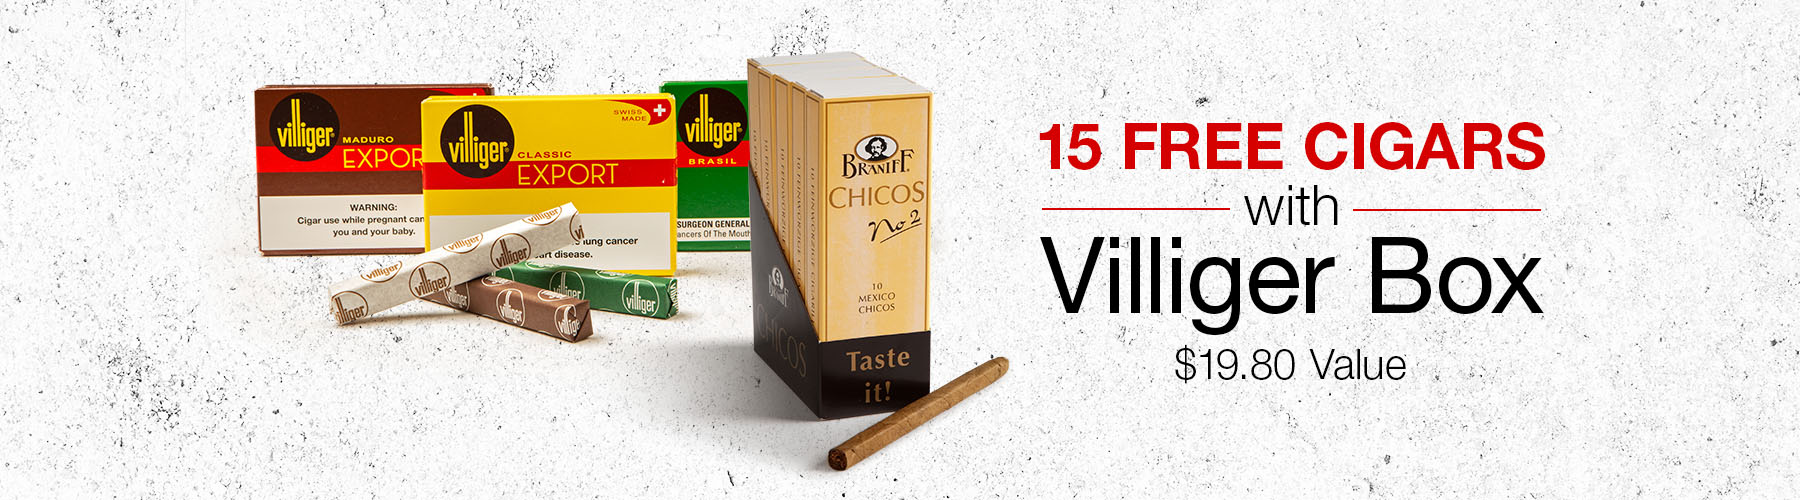 15 free cigars with Villiger box!
$19.80 Value